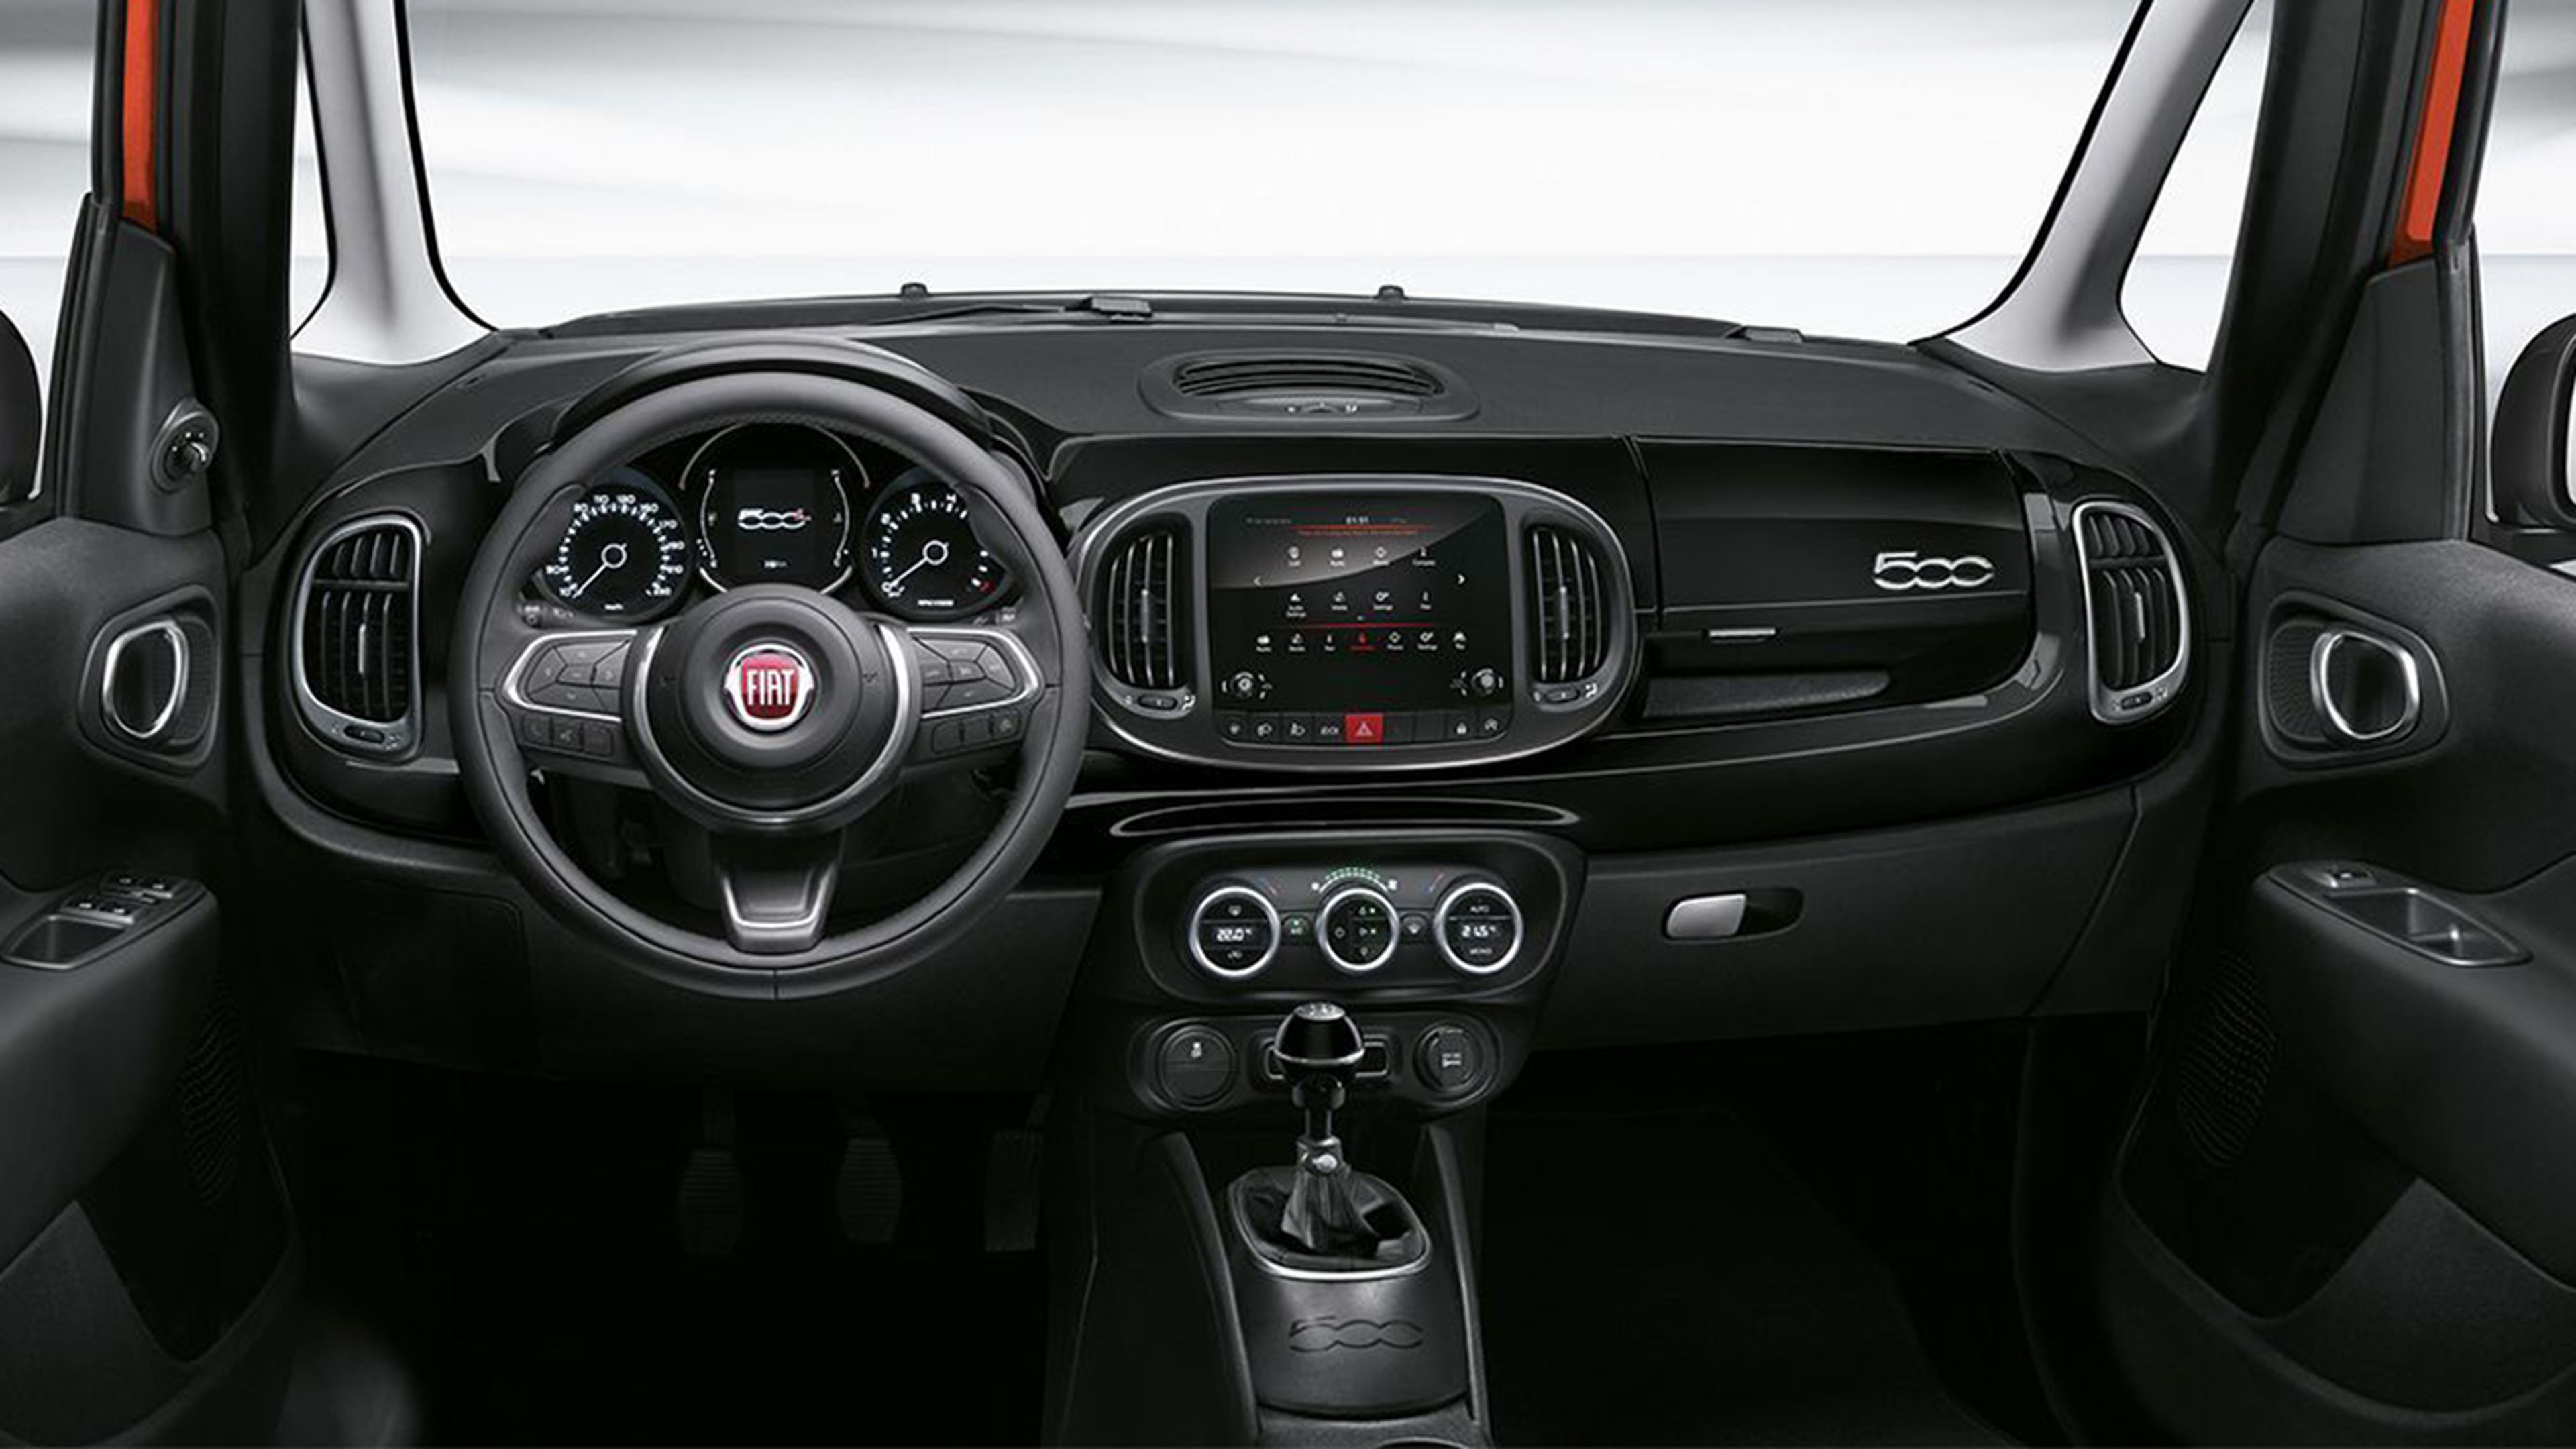 Fiat 500L interior